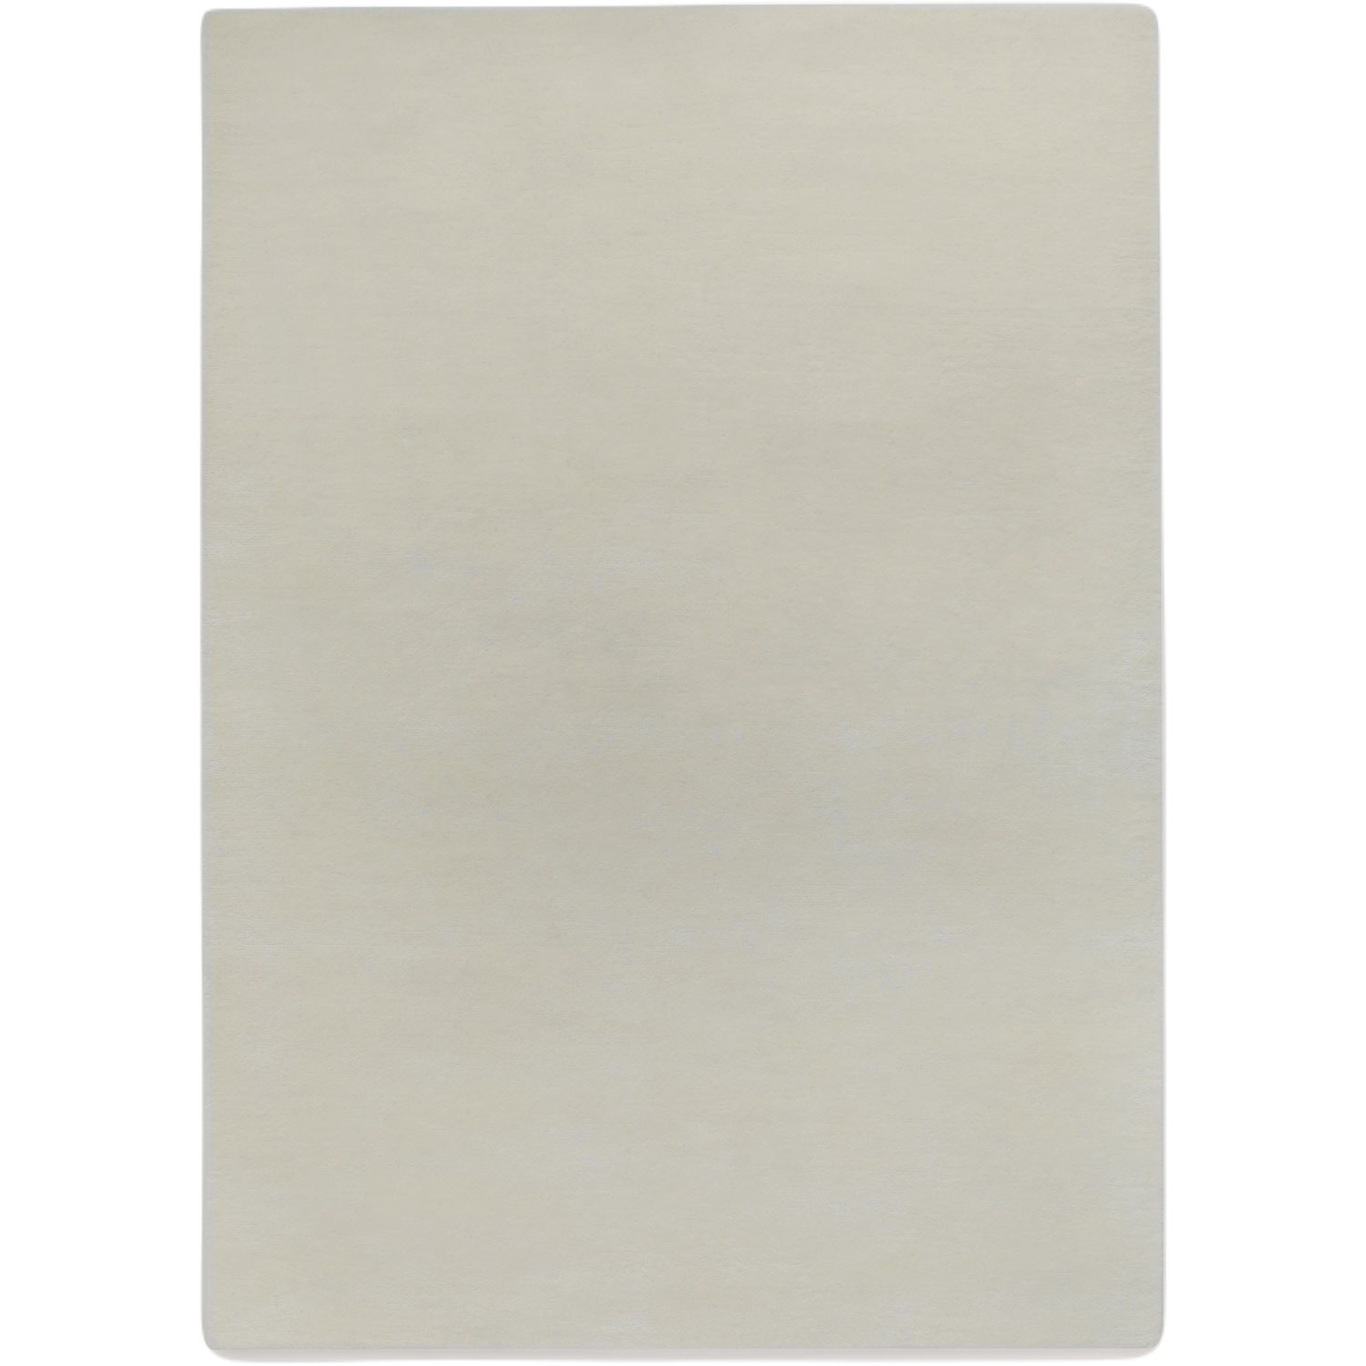 Liljehok Ullteppe Off-white, 300x200 cm